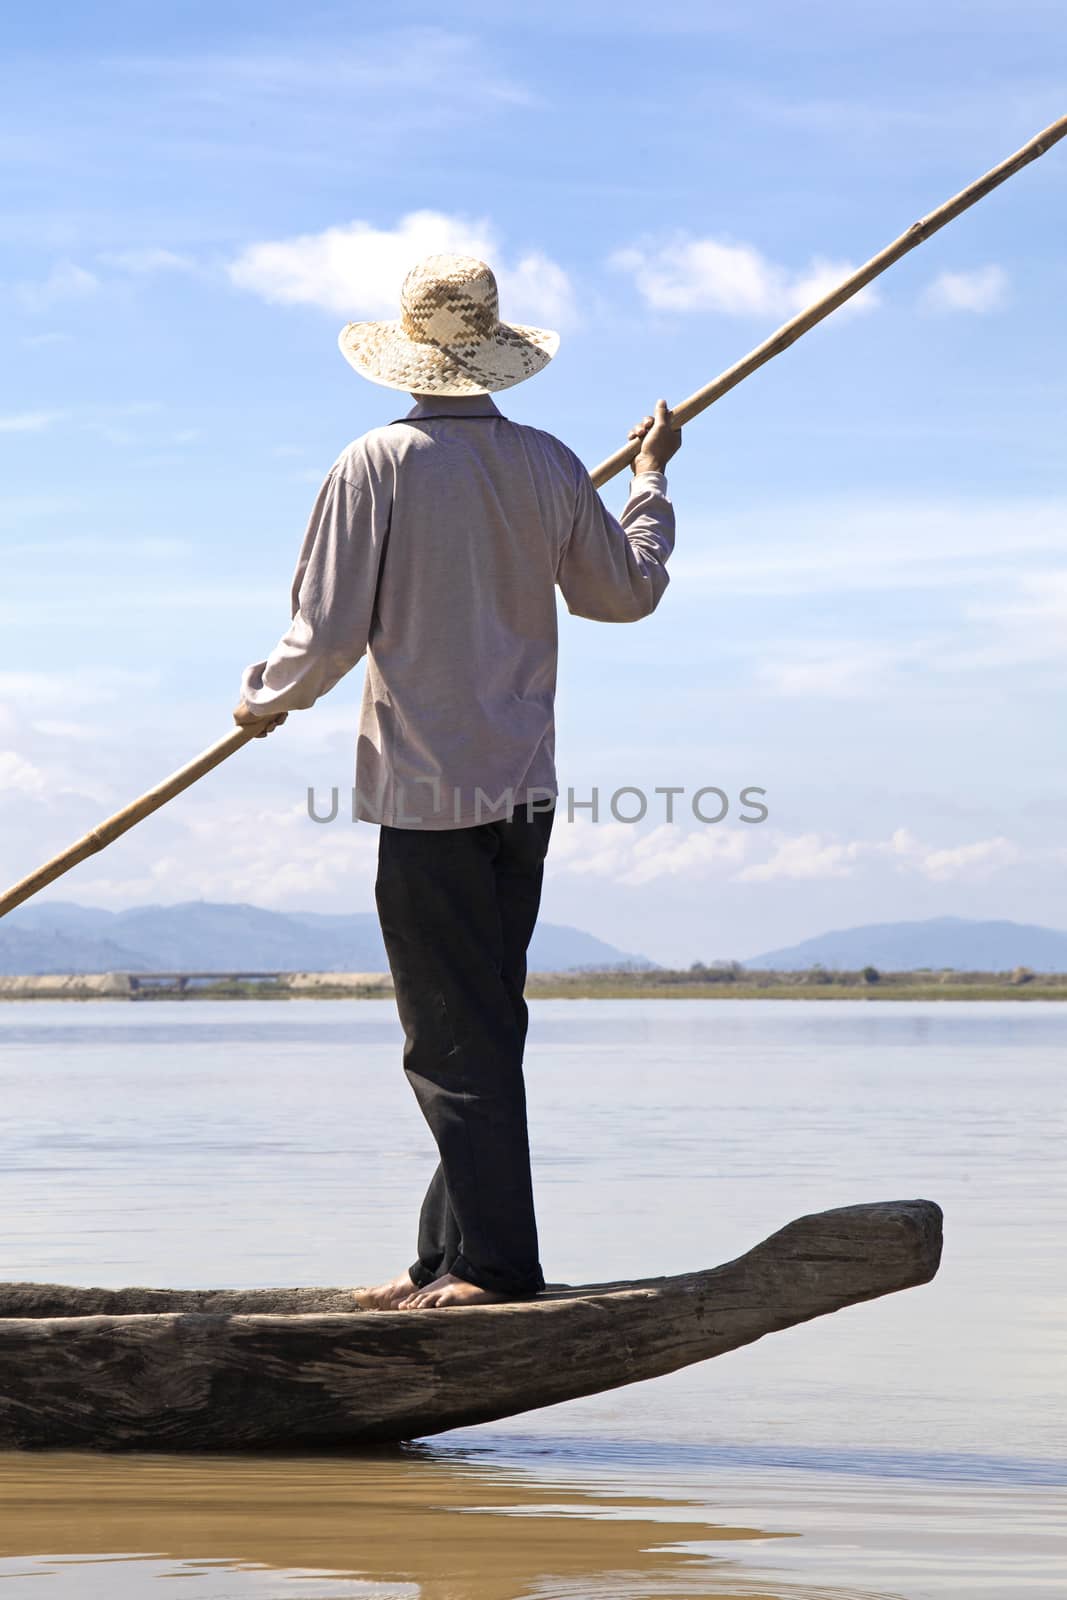 Dak Lak, VIETNAM - JANUARY 6, 2015 - Man pushing a boat with a long pole